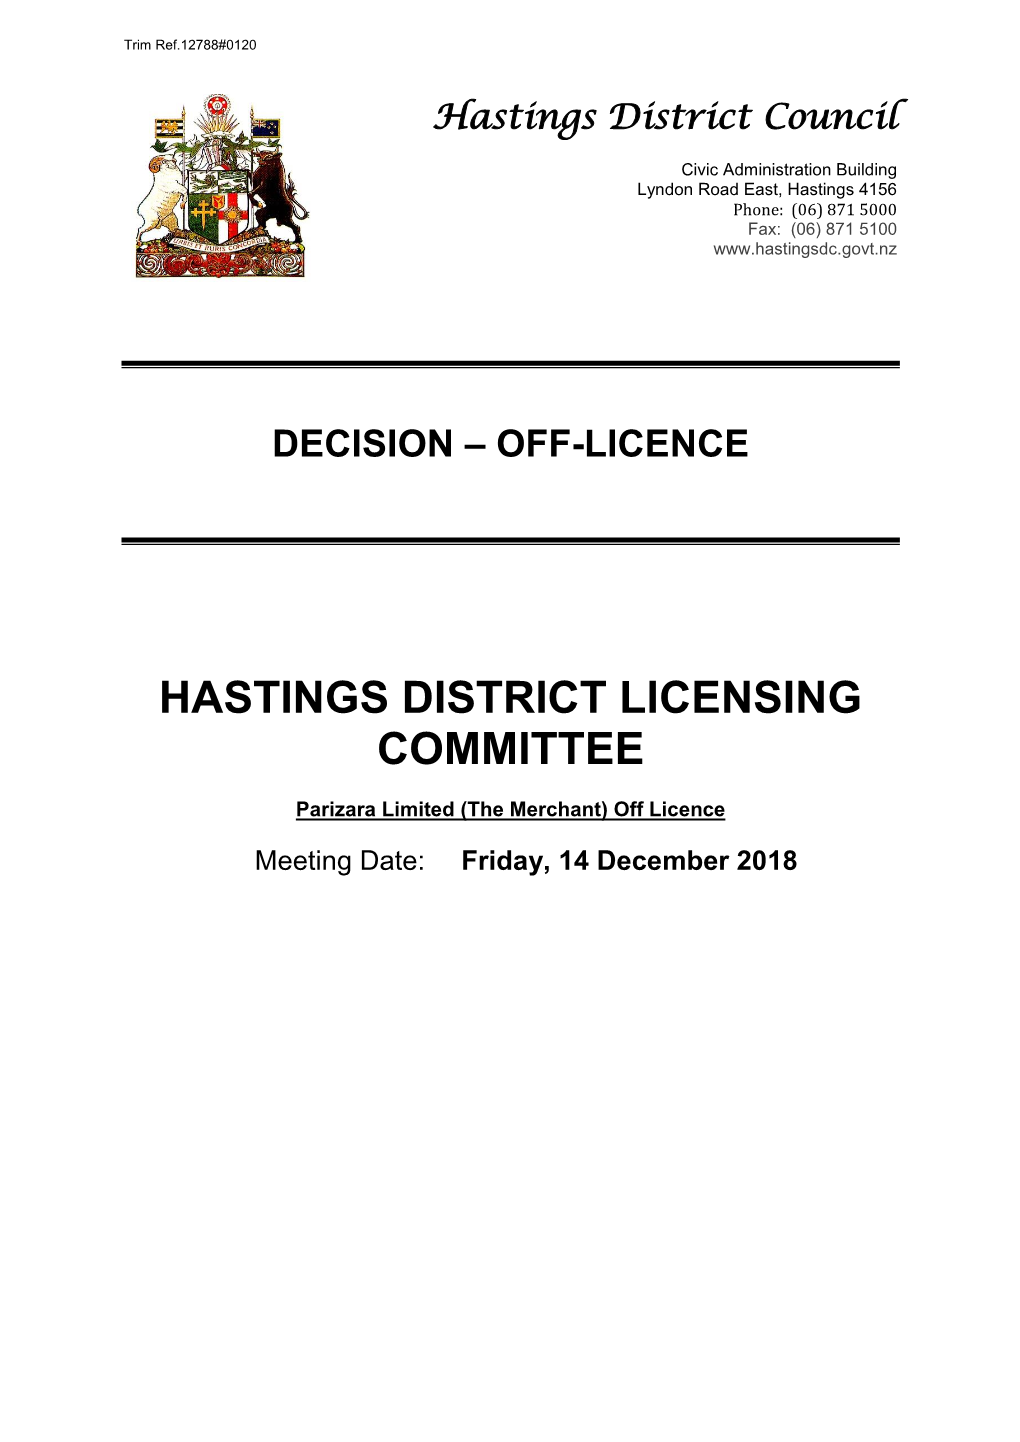 Hastings District Licensing Committee